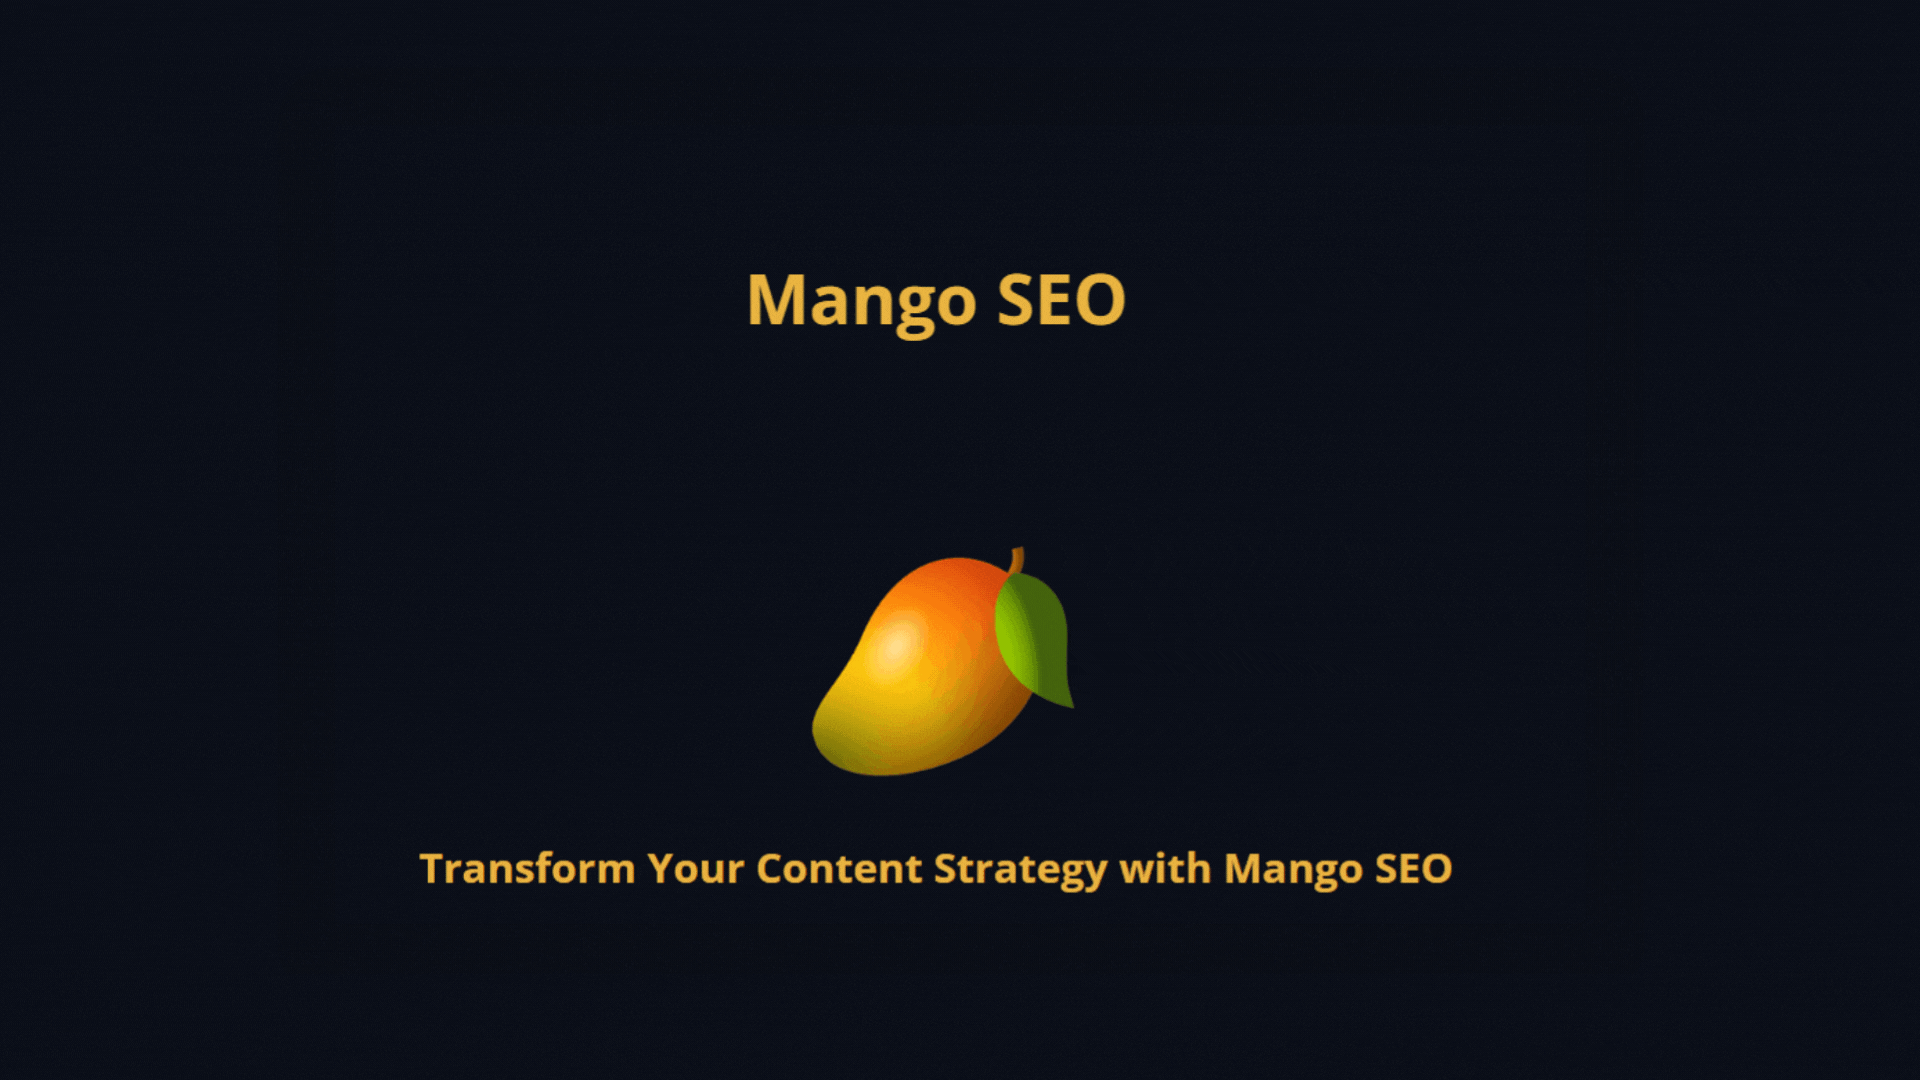 startuptile Mango SEO AI-Rank #1 in search with Mango AI powered Progammatic SEO